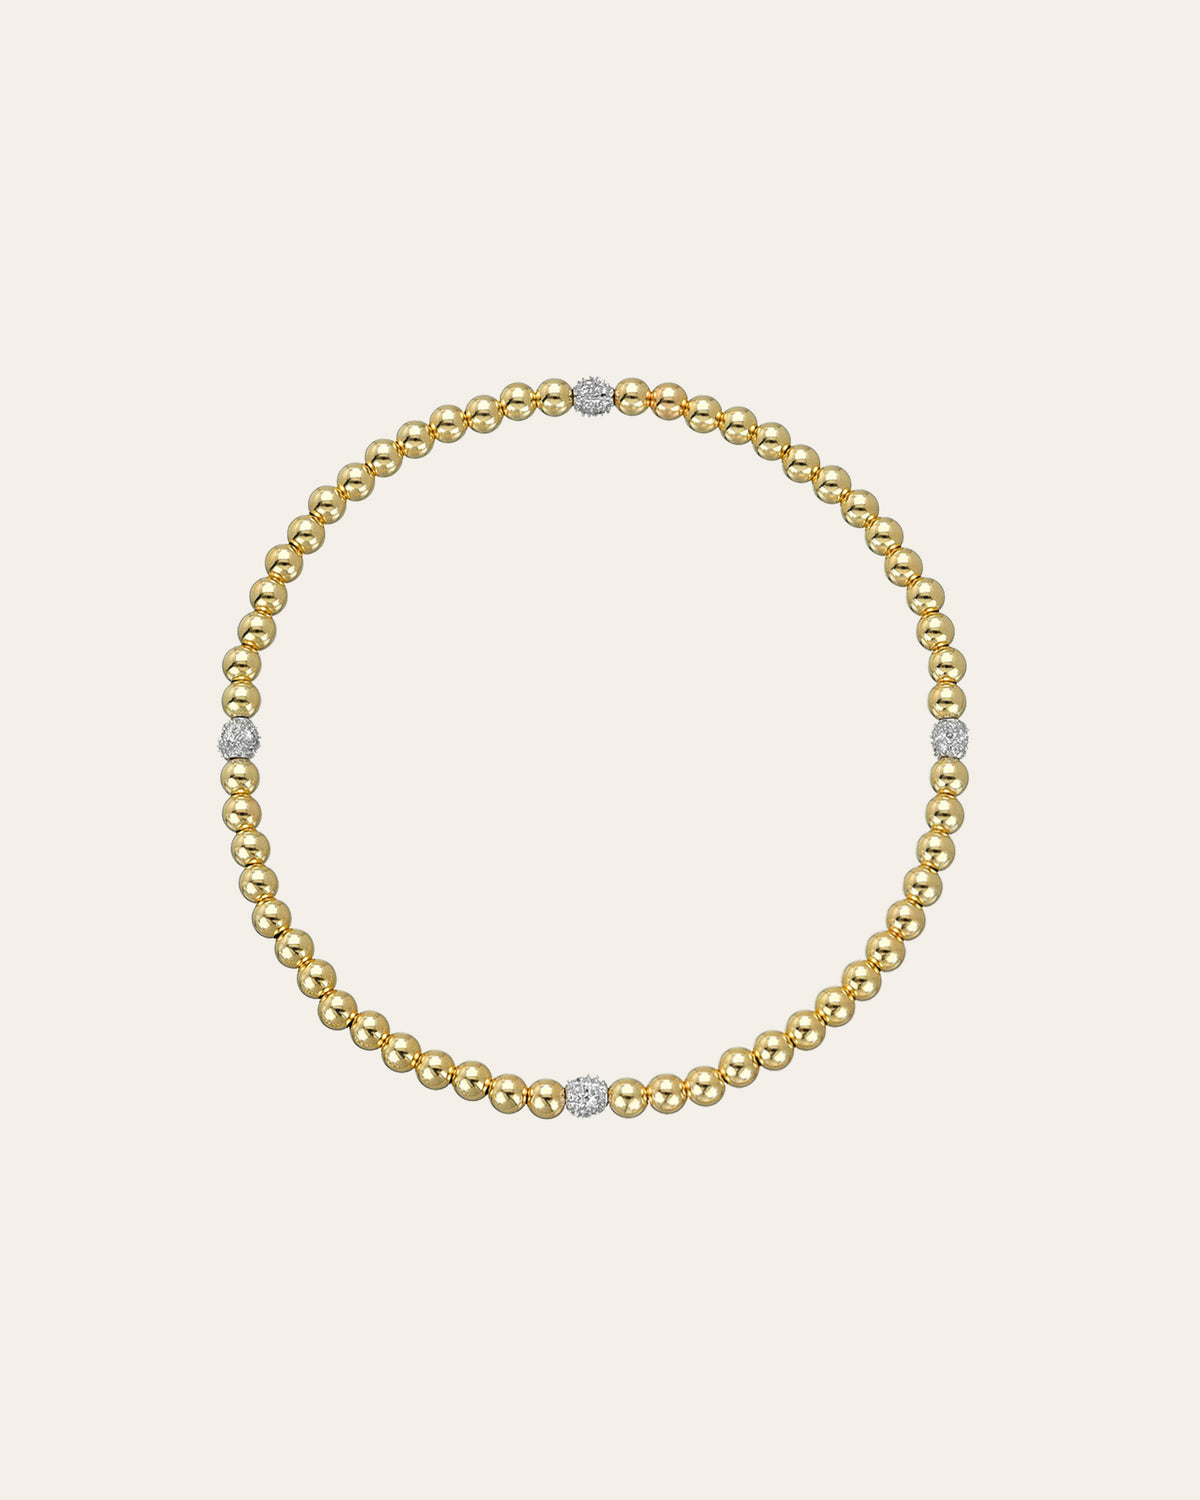 3mm Gold Segment Bead Bracelet with Diamond Beads